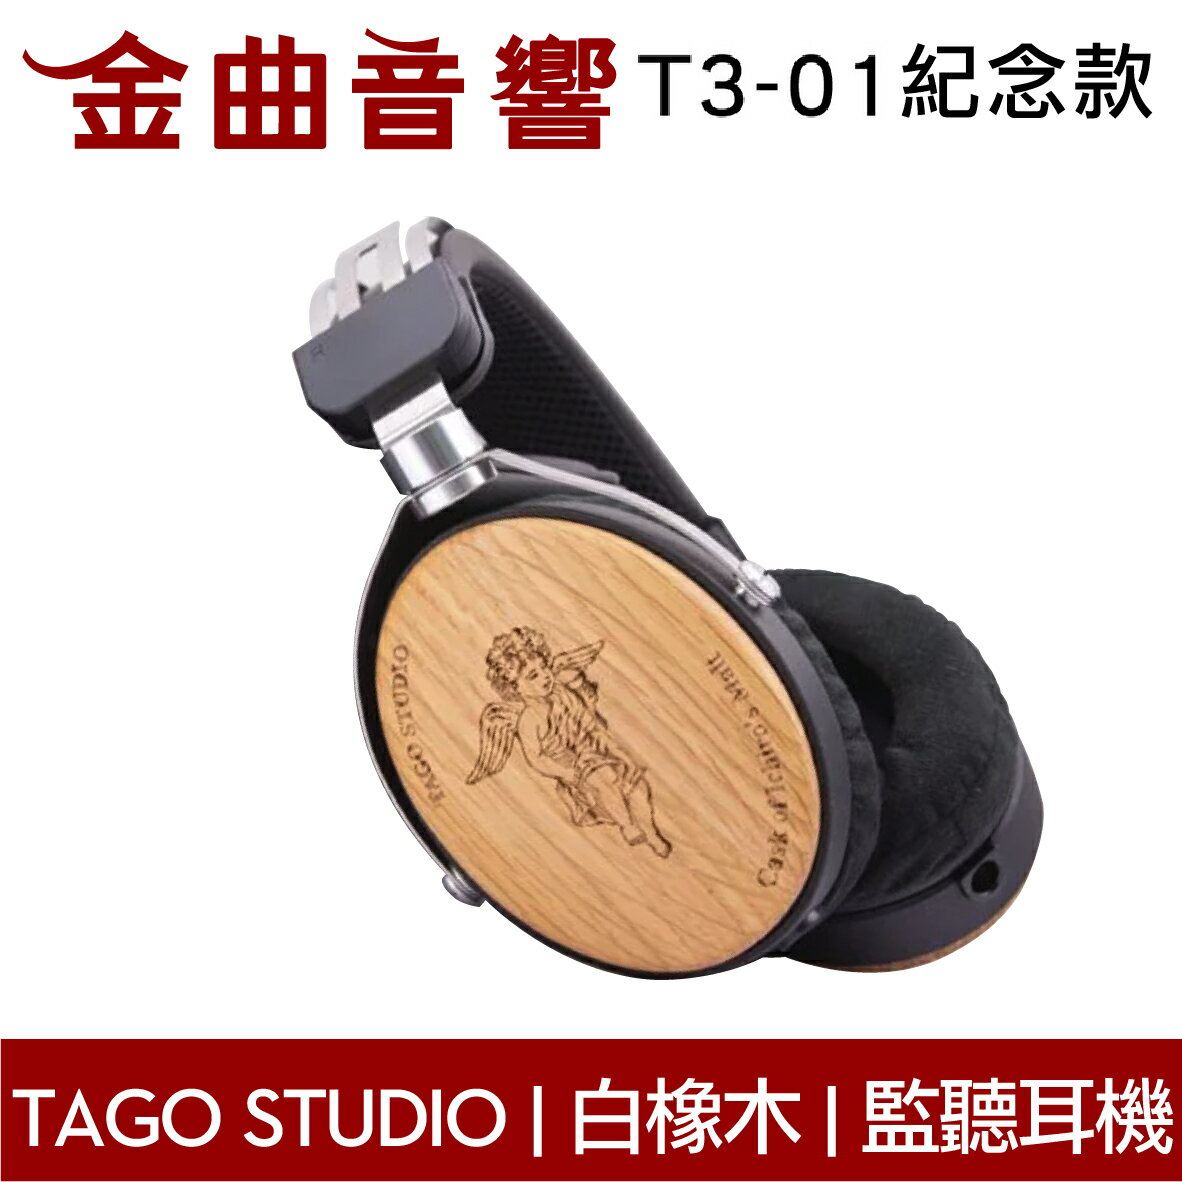 TAGO STUDIO T3-01 紀念款酒桶白橡木外殼40mm動圈監聽耳機耳罩式耳機| 金曲音響| 金曲音響直營店| 樂天市場Rakuten